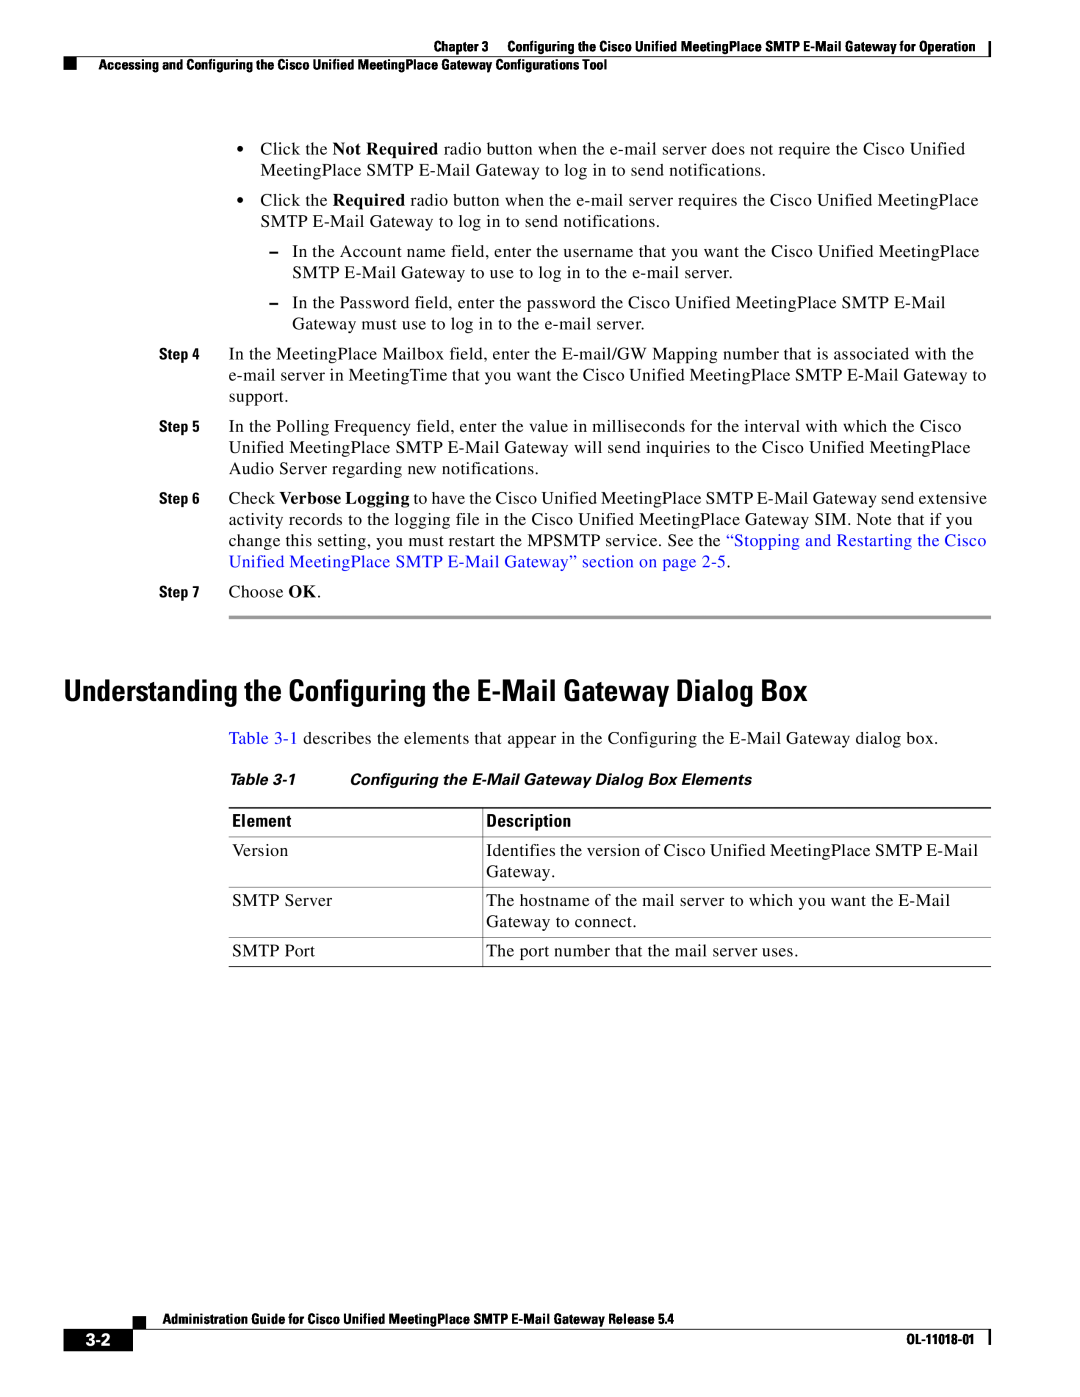 Cisco Systems SMTP manual Understanding the Configuring the E-Mail Gateway Dialog Box, Element, Description 